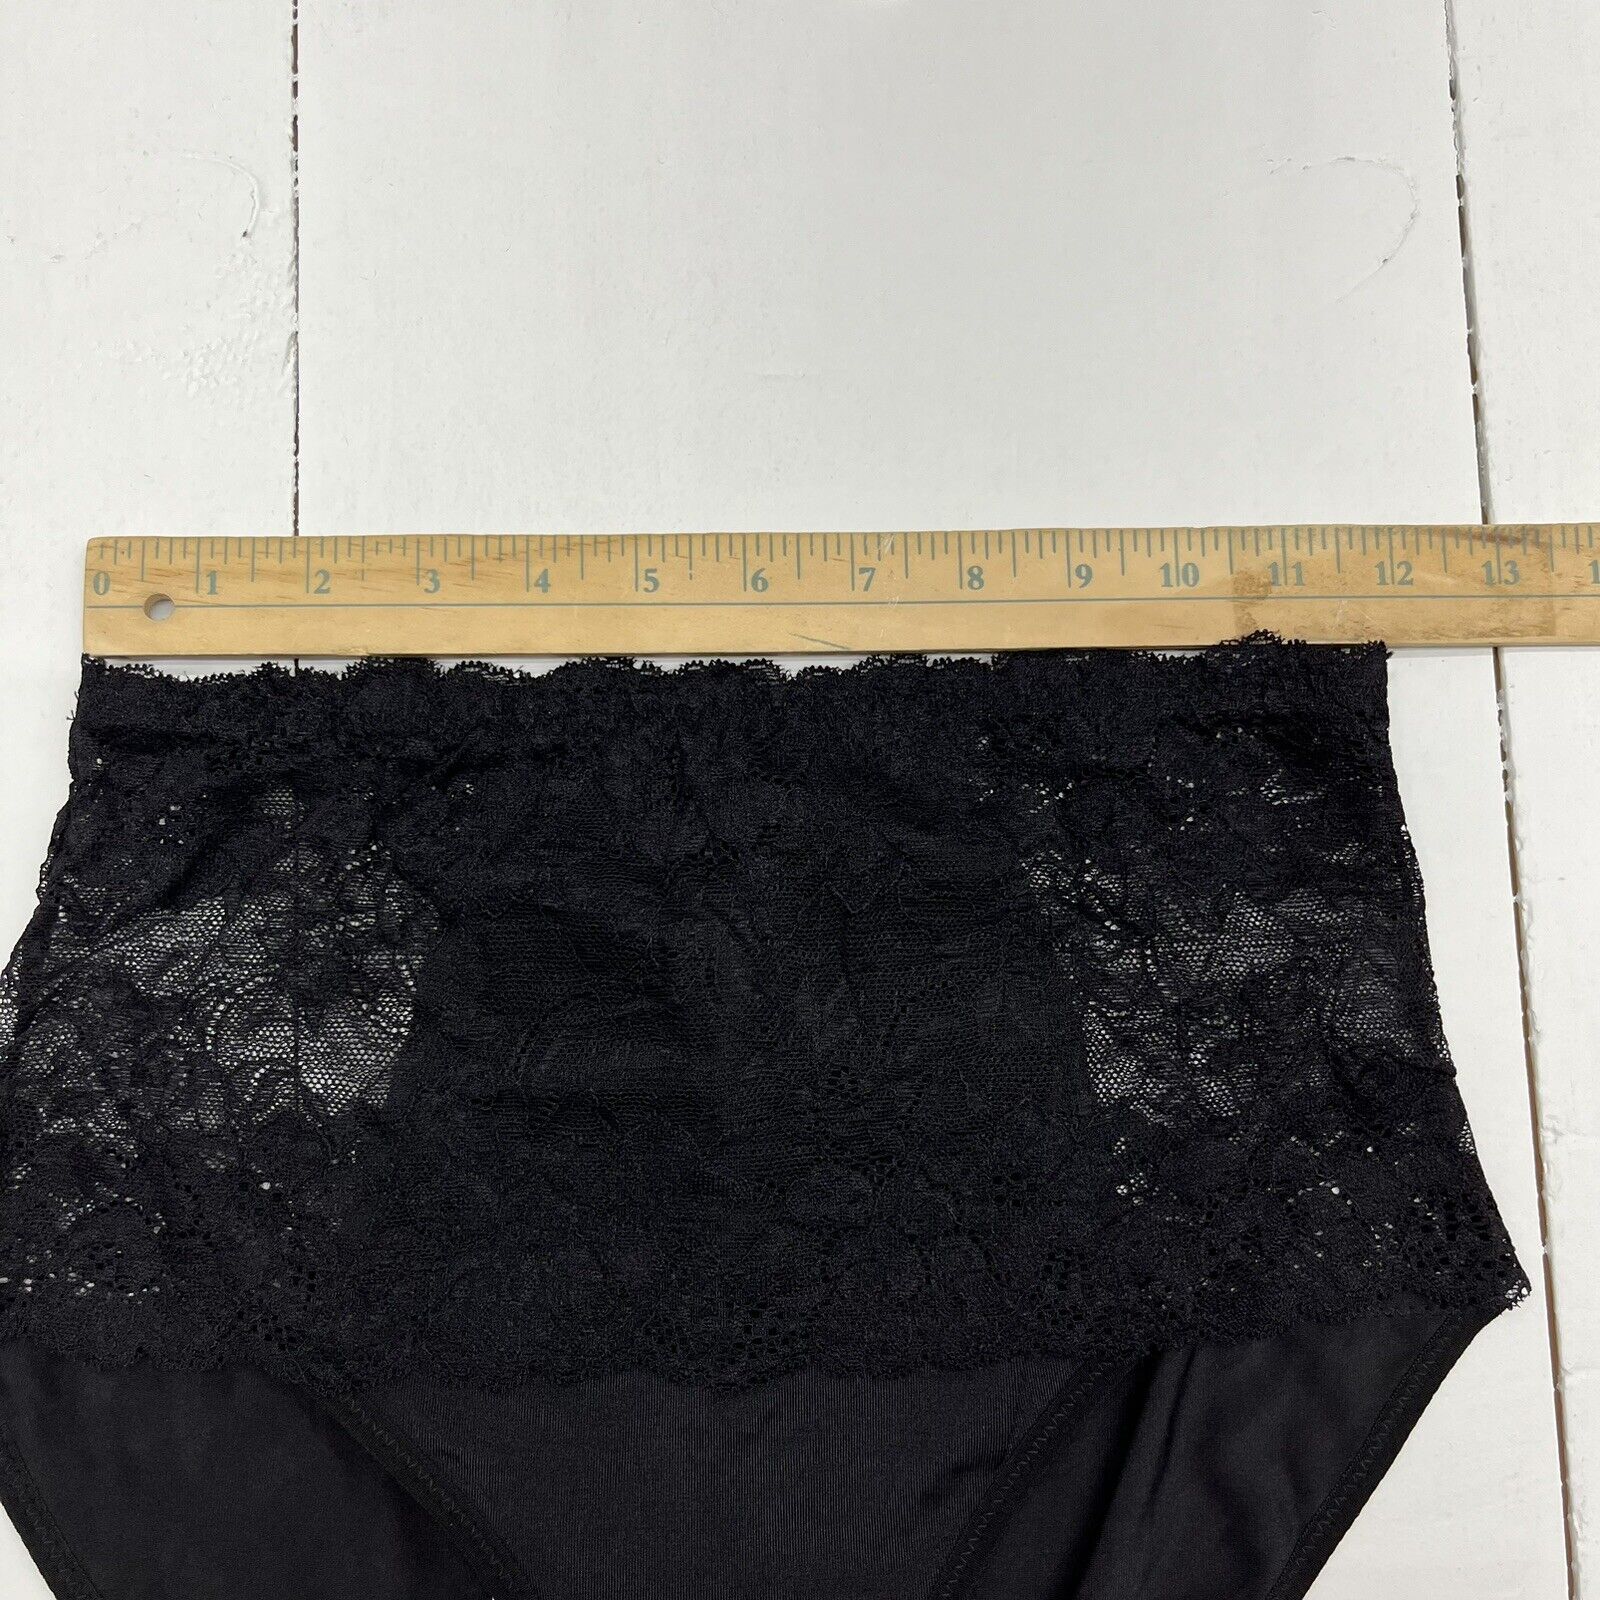 Rhonda Shear Black Ahh Panty Lace Overlay Briefs Women's Size